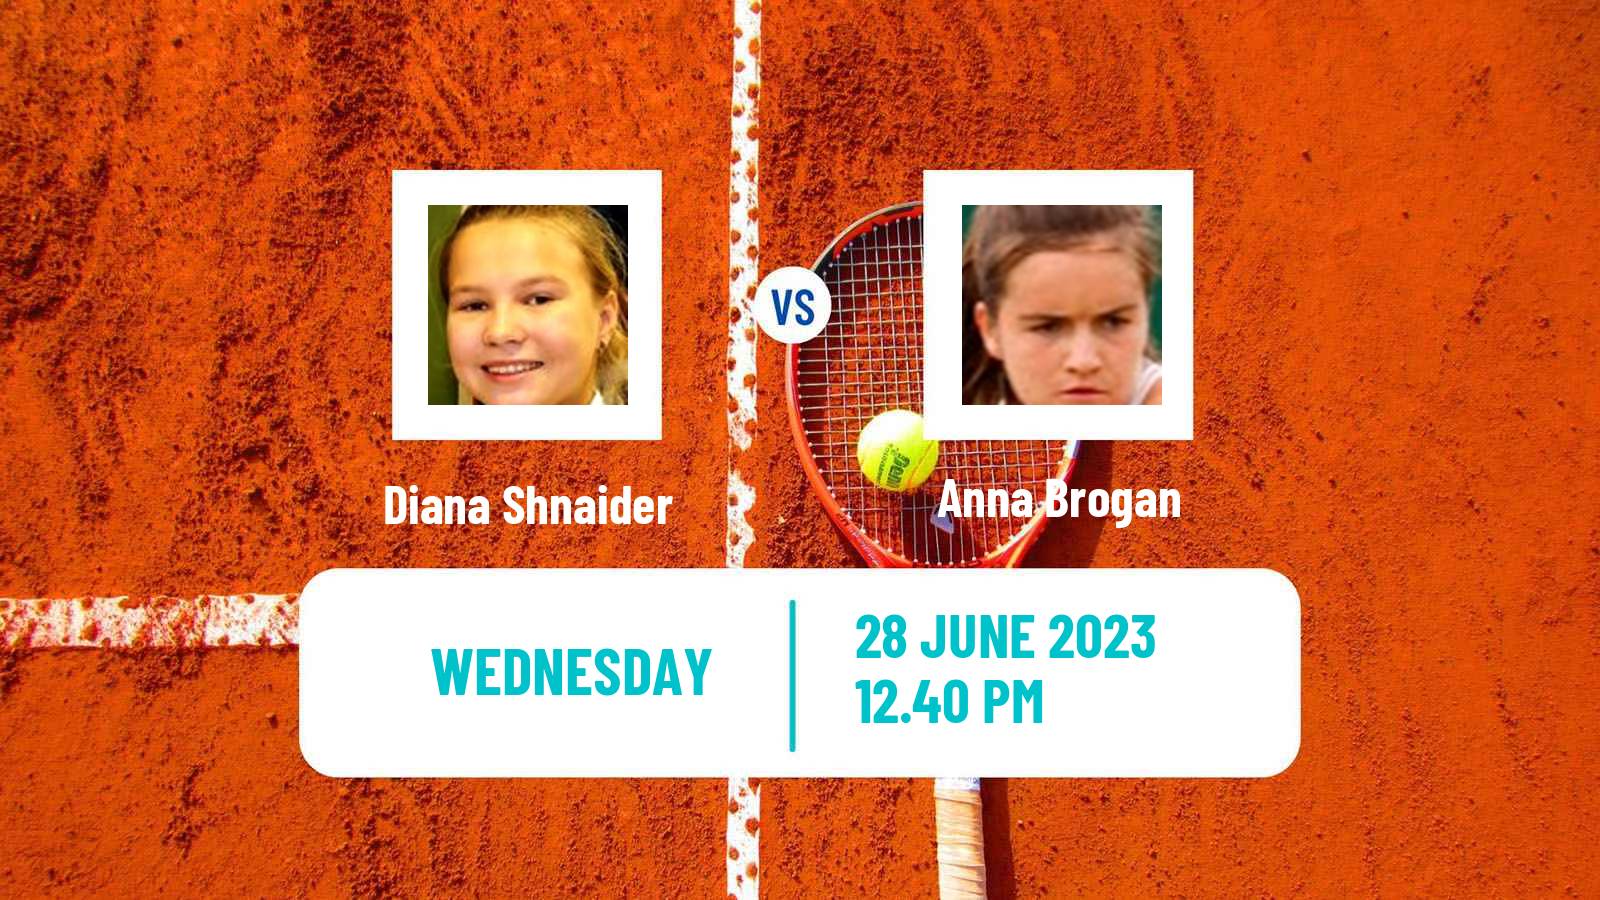 Tennis WTA Wimbledon Diana Shnaider - Anna Brogan